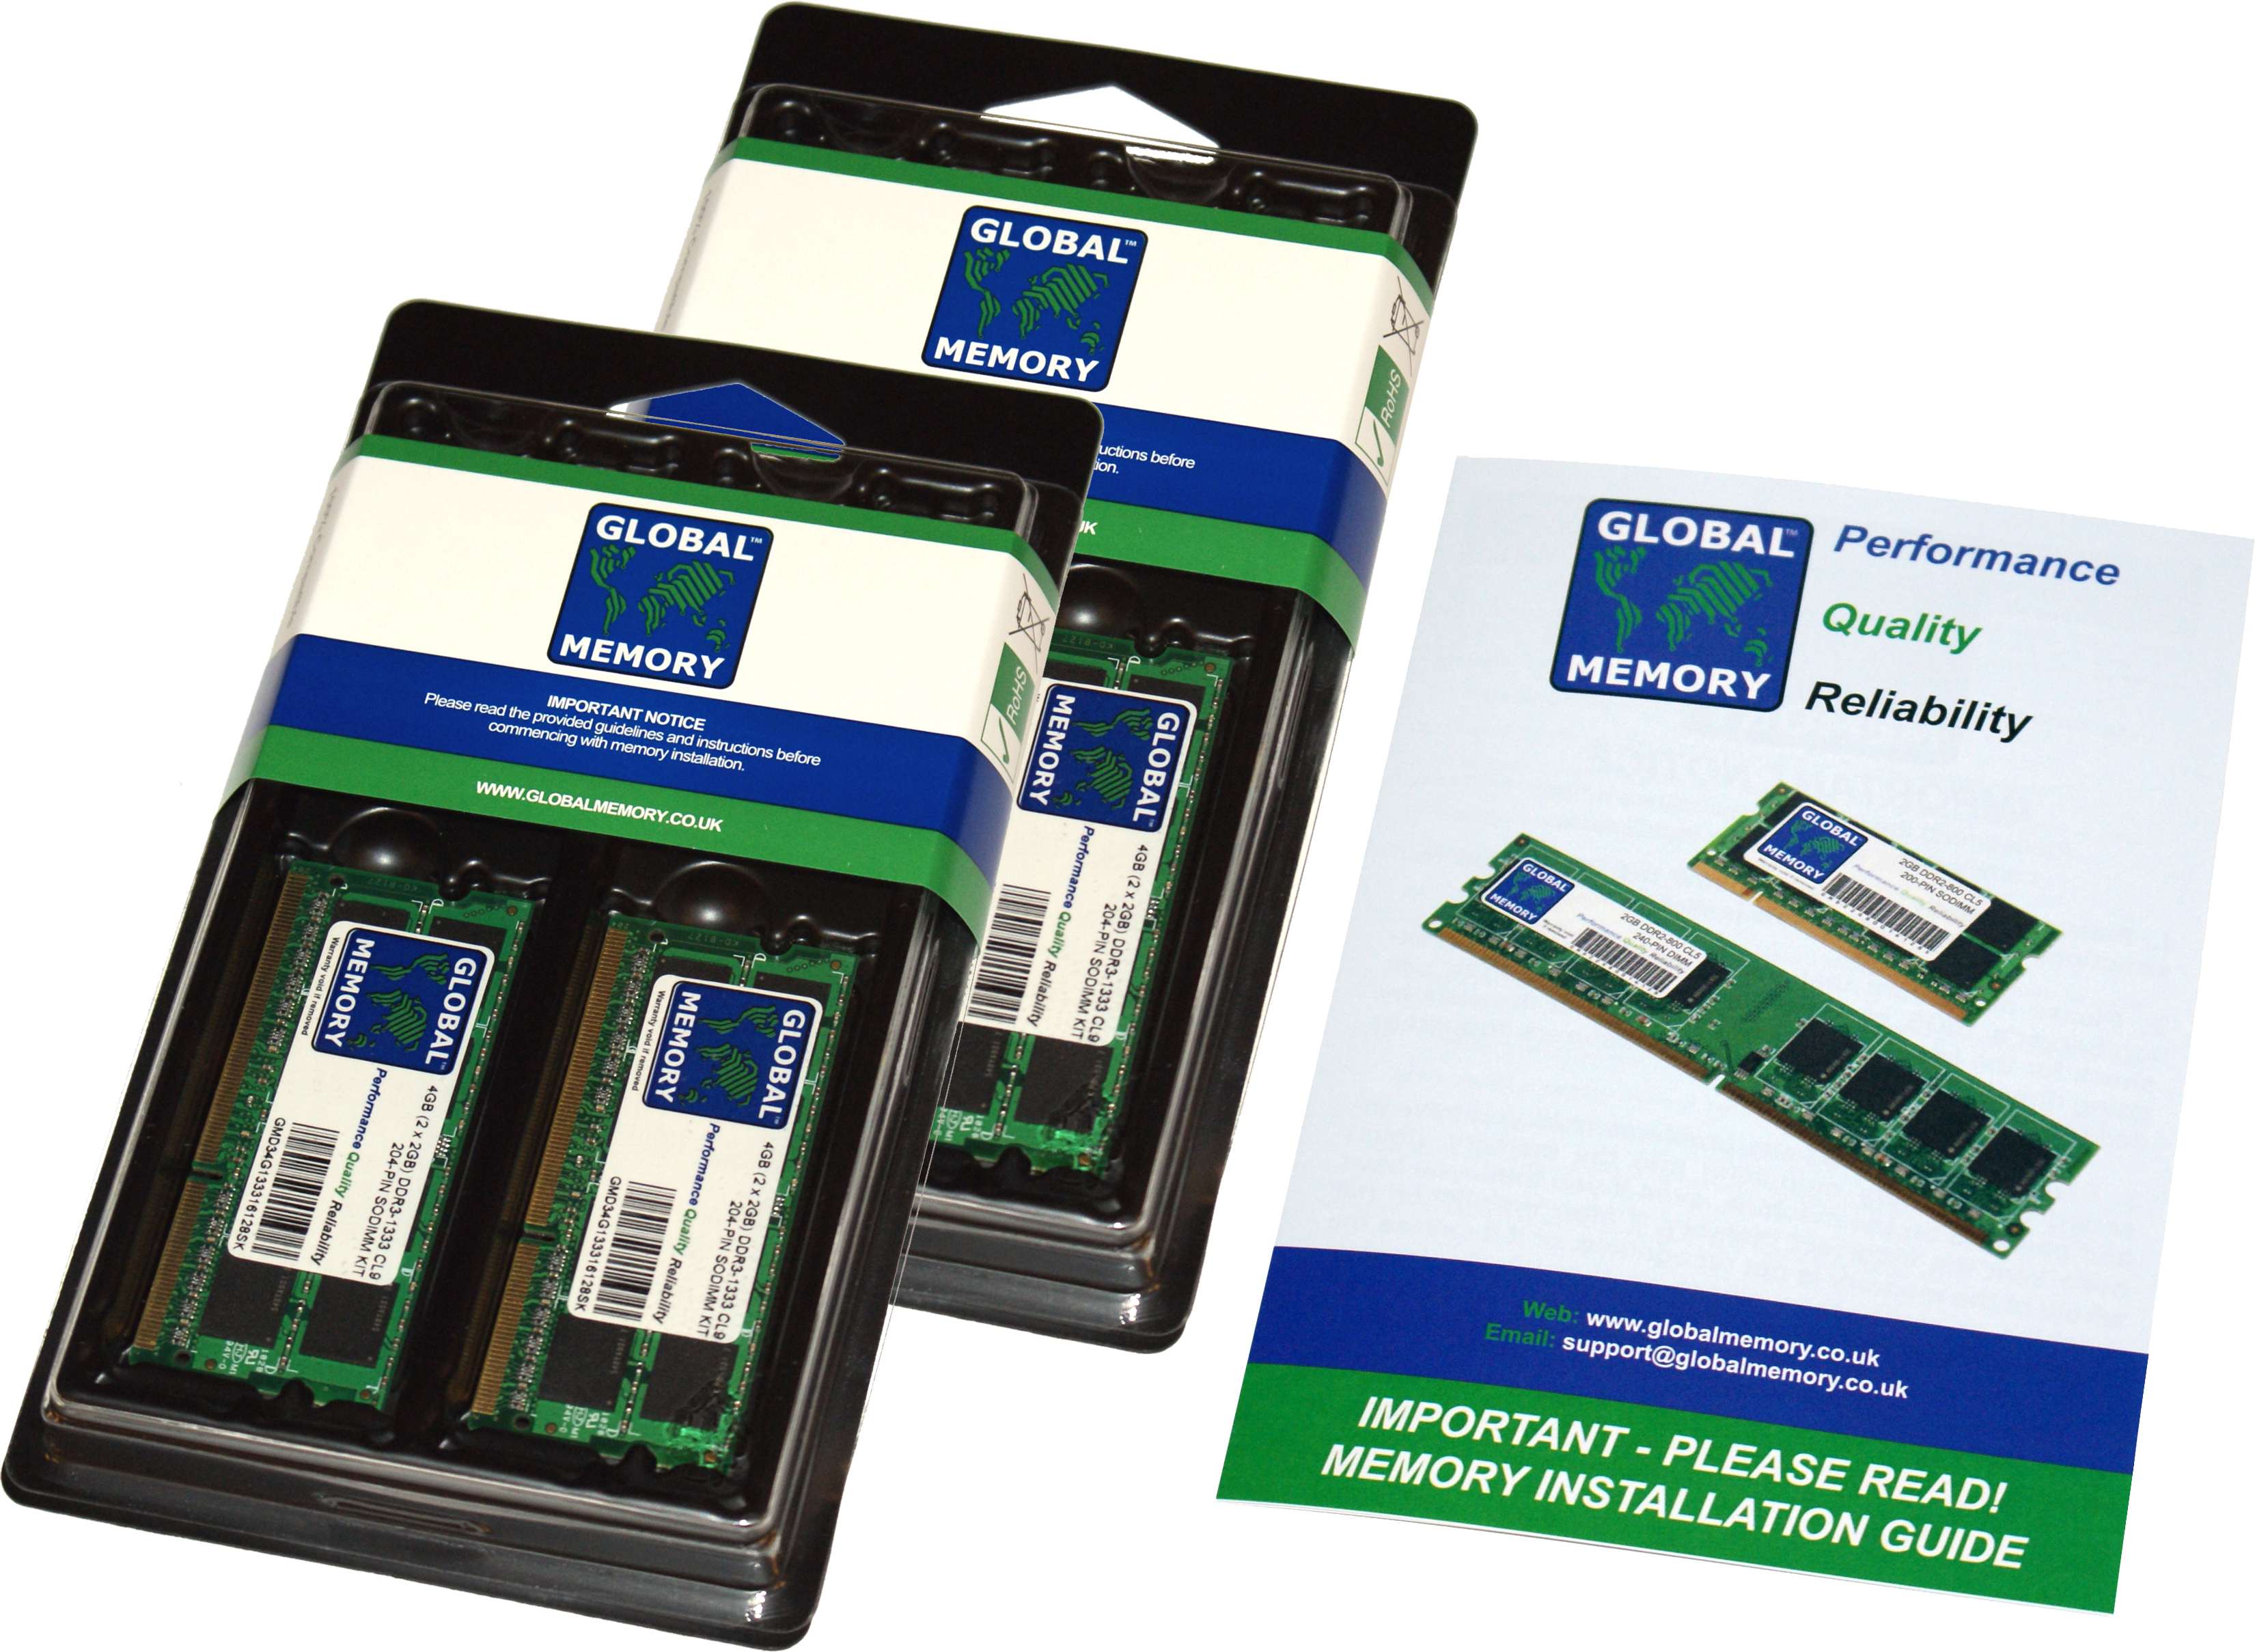 16GB (4 x 4GB) DDR3 1866MHz PC3-14900 204-PIN SODIMM MEMORY RAM KIT FOR LAPTOPS/NOTEBOOKS